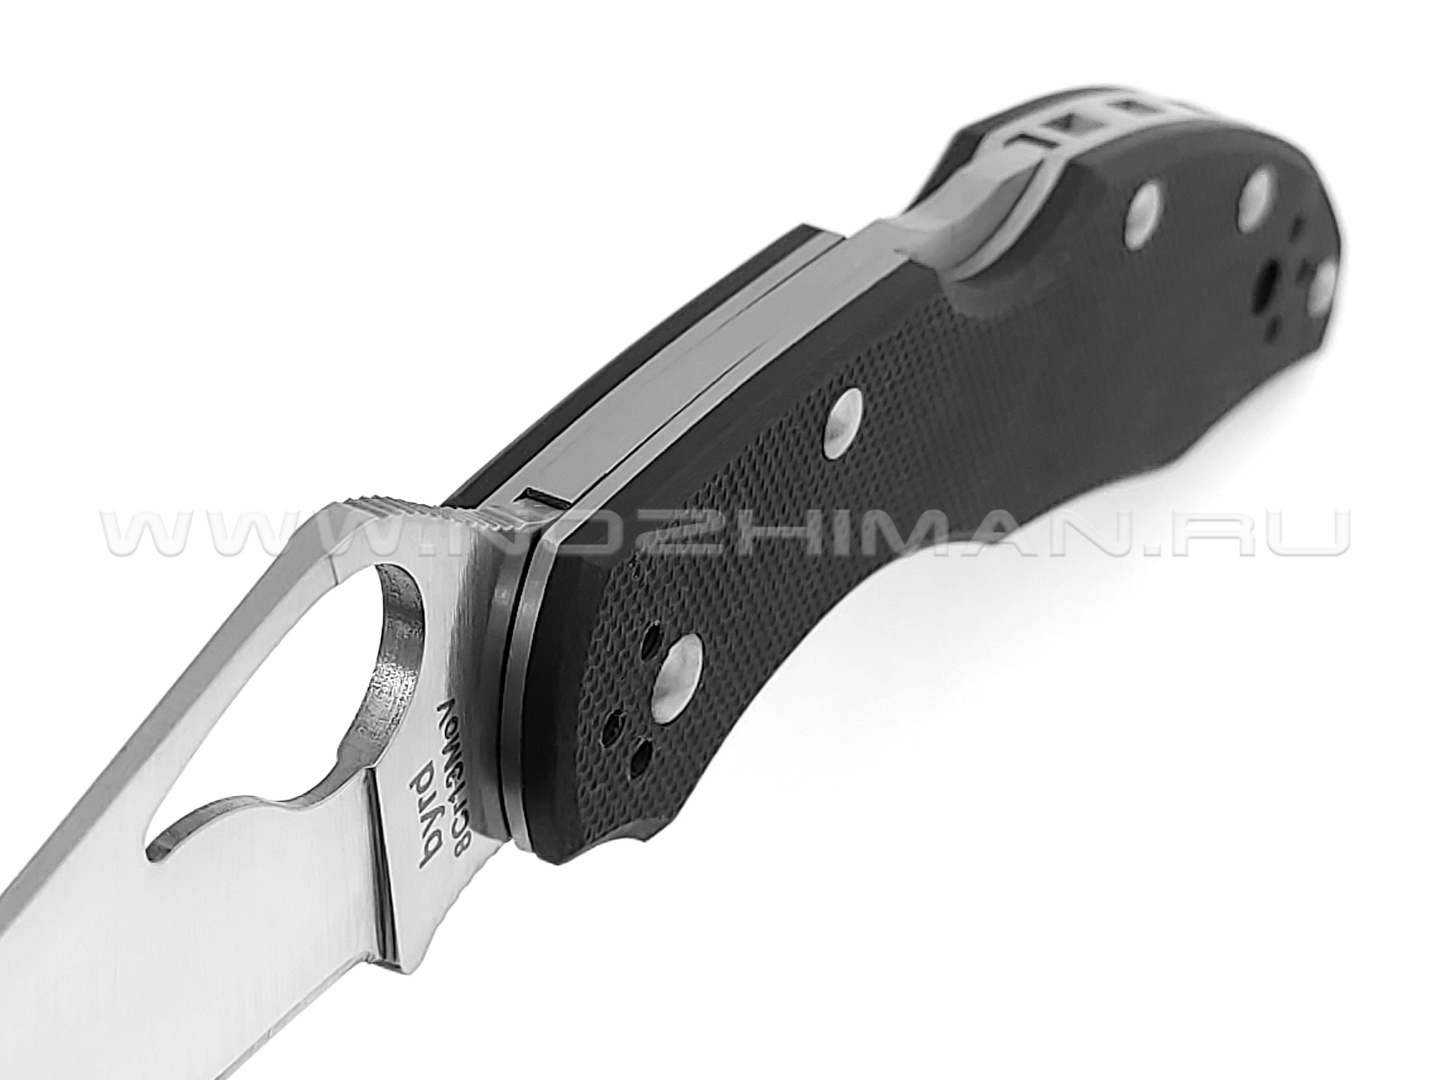 Byrd нож Meadowlark 2 BY04GP2 сталь 8Cr13MoV, рукоять G10 black